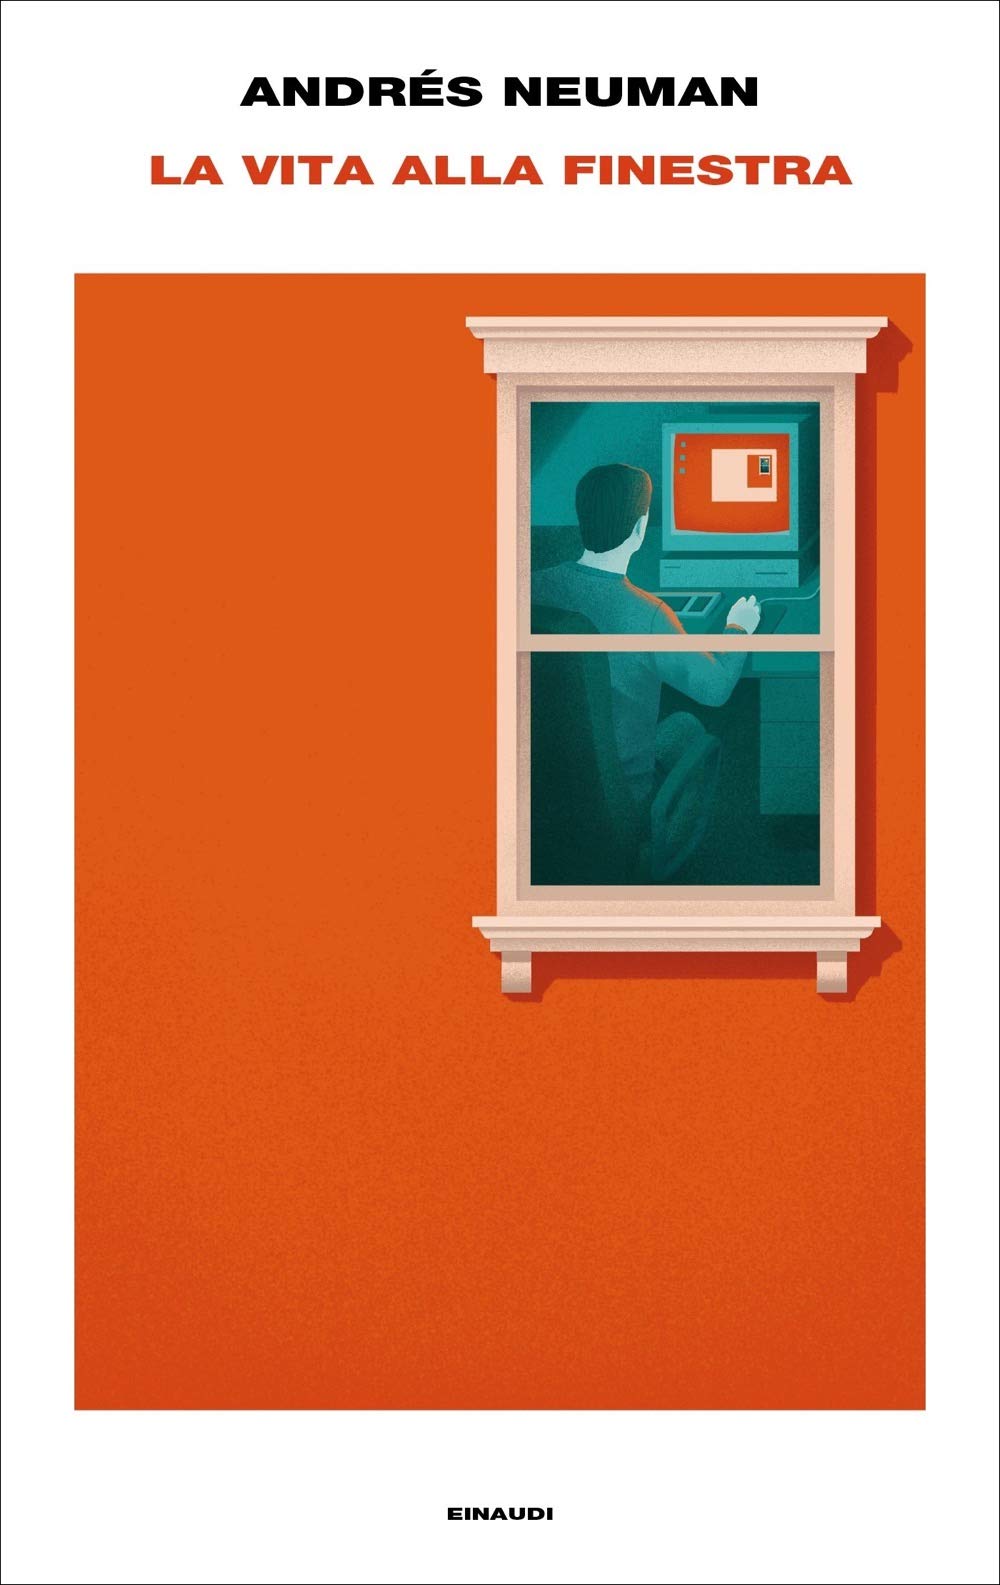 Andrés Neuman, La vita alla finestra, Einaudi